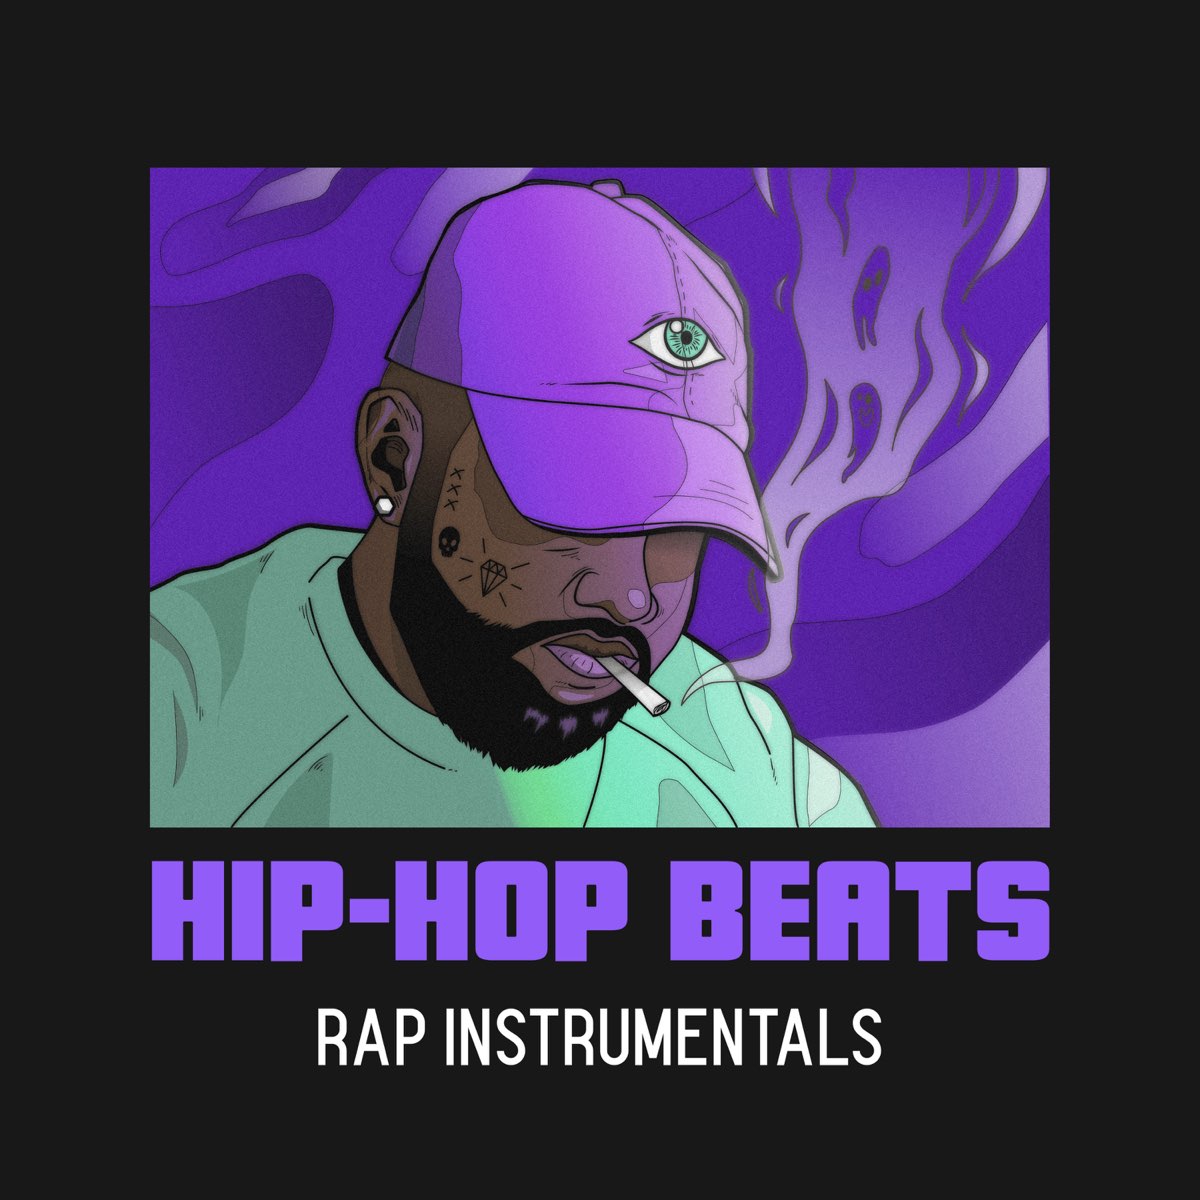 Hip Hop Beats (Rap Instrumentals) by Instrumental Hip Hop Beats Gang, Instrumental Rap Hip Hop & Type Beats on Apple